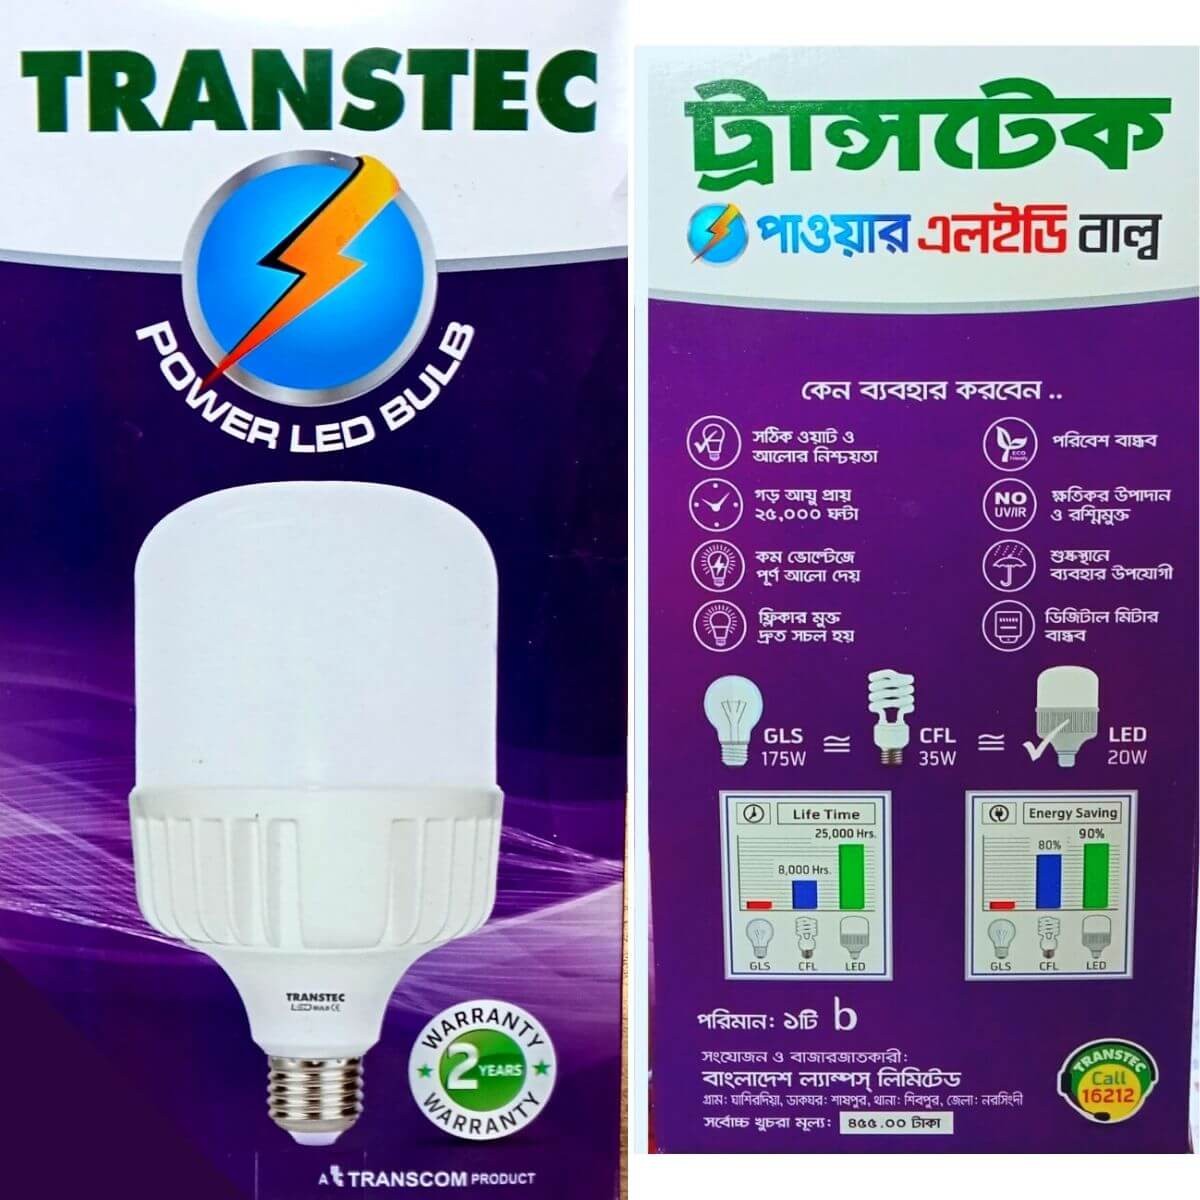 Transtec Bright 20Watt LED Bulb প্যাচ টাইপ... BD